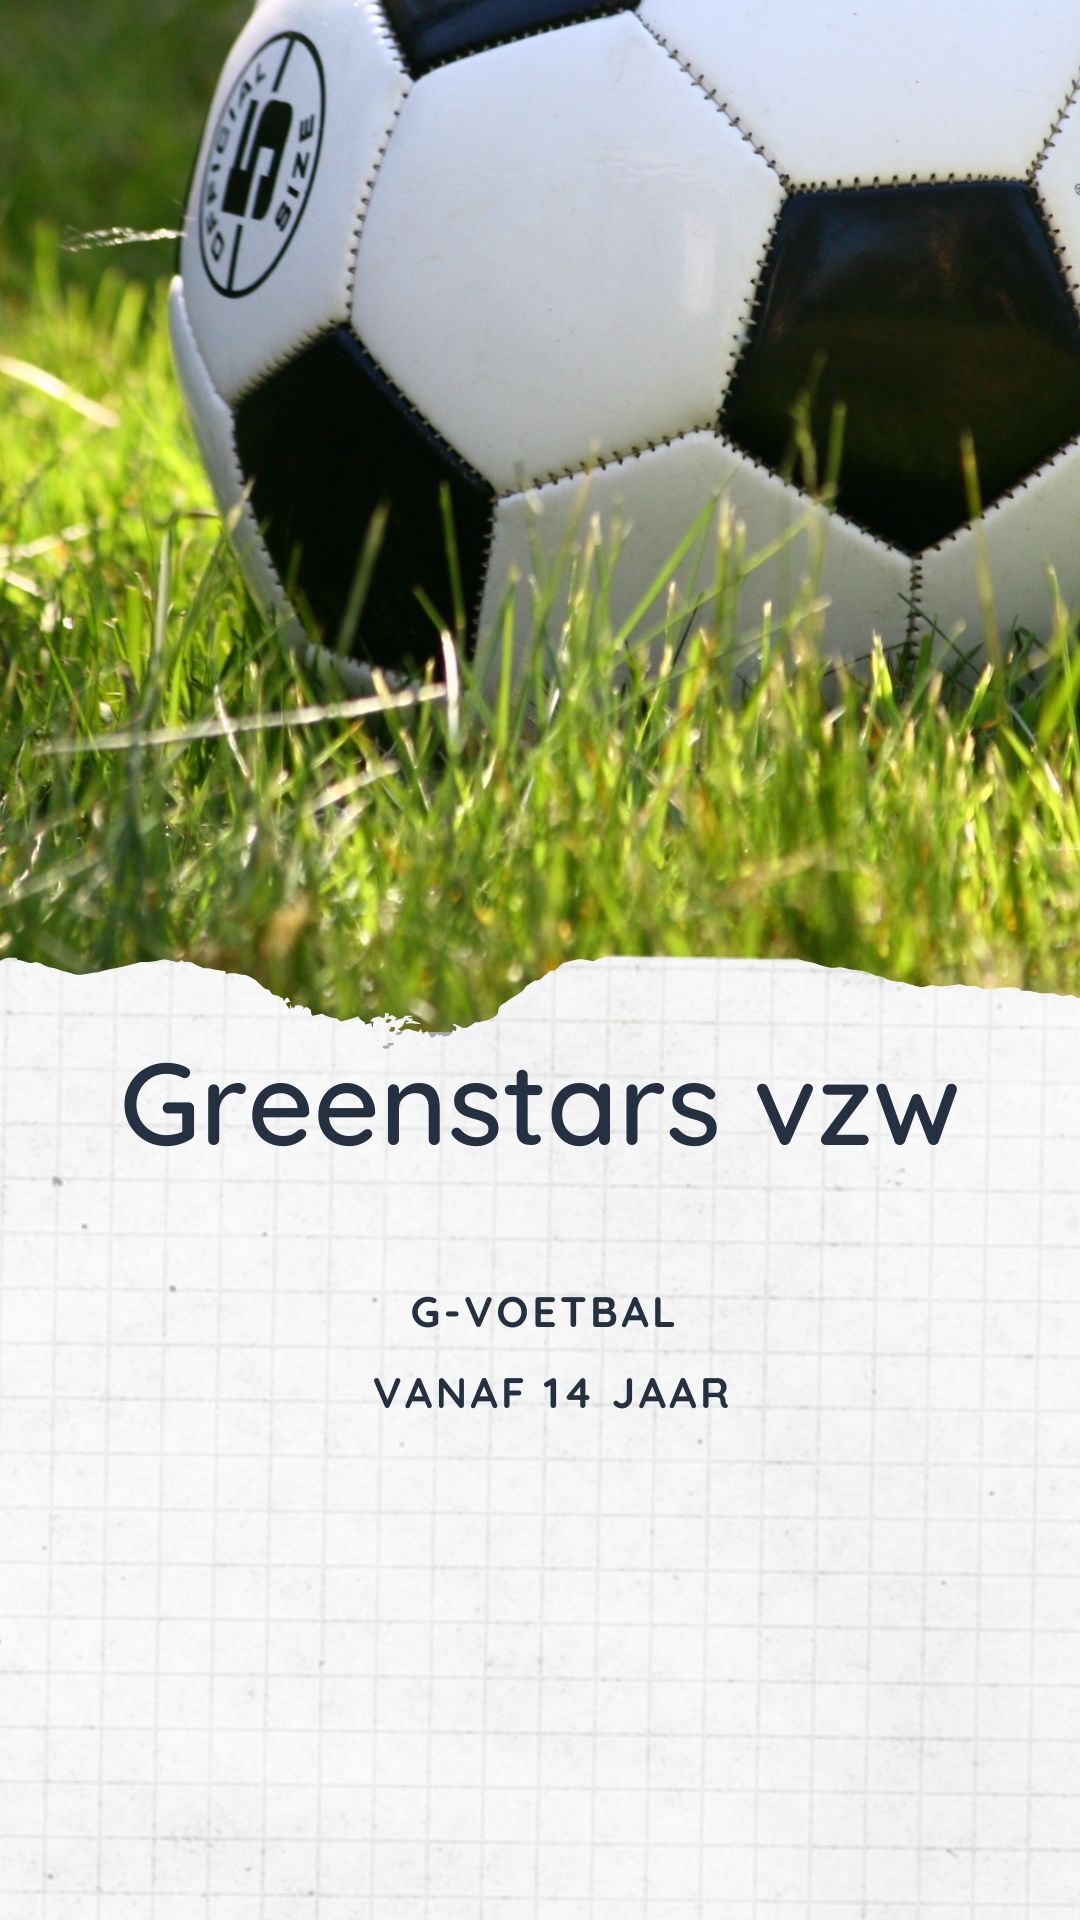 Greenstars vzw